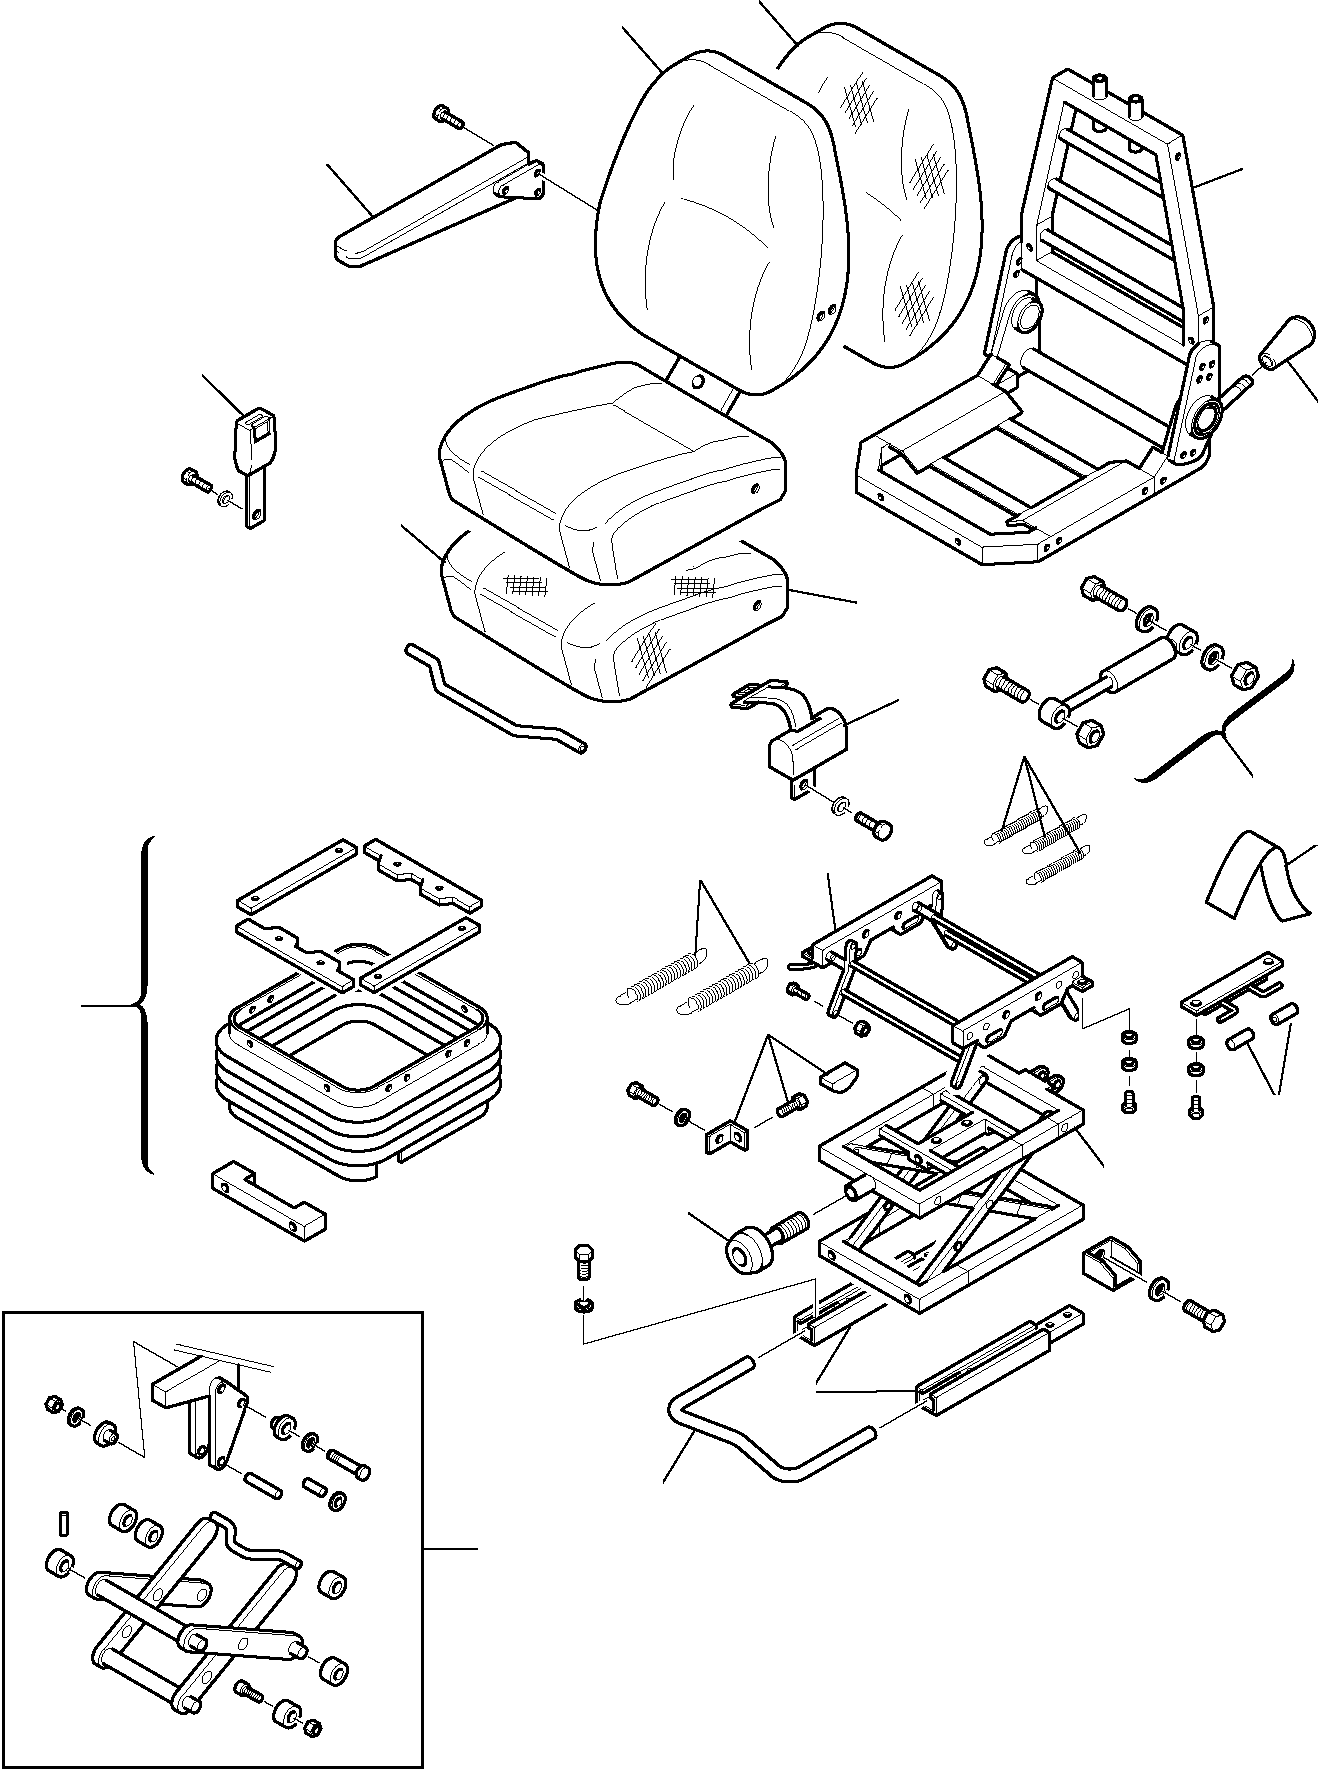 5715. OPERATOR'S SEAT (2/2) [5715] - Komatsu part WB97S-5 S/N F00003-Up [wb97s5]